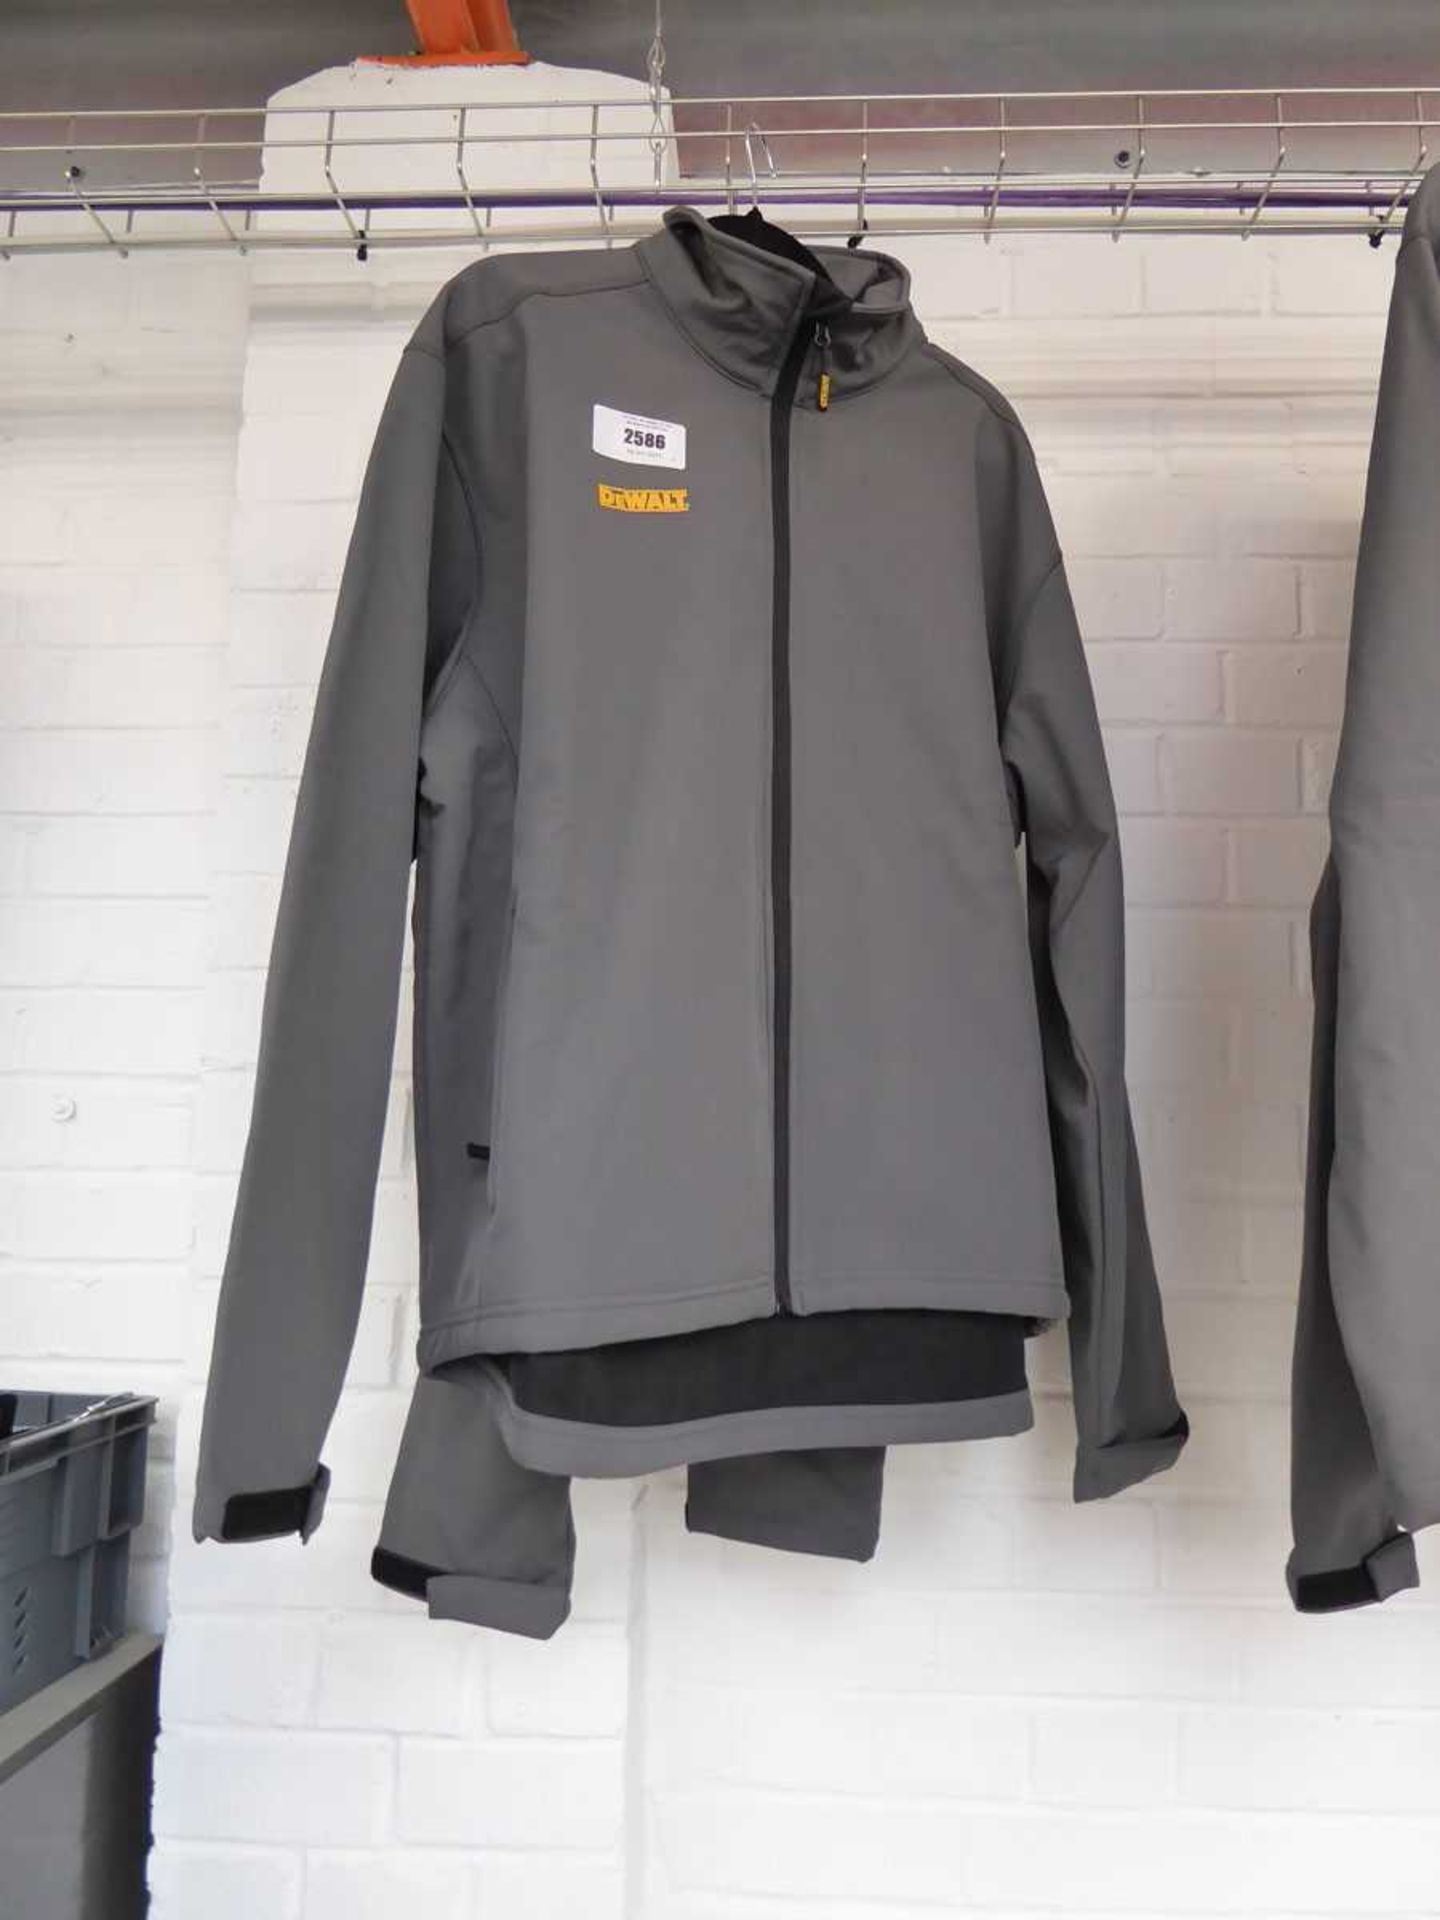 +VAT 2 DeWalt full zip grey waterproof jackets (size XXL)